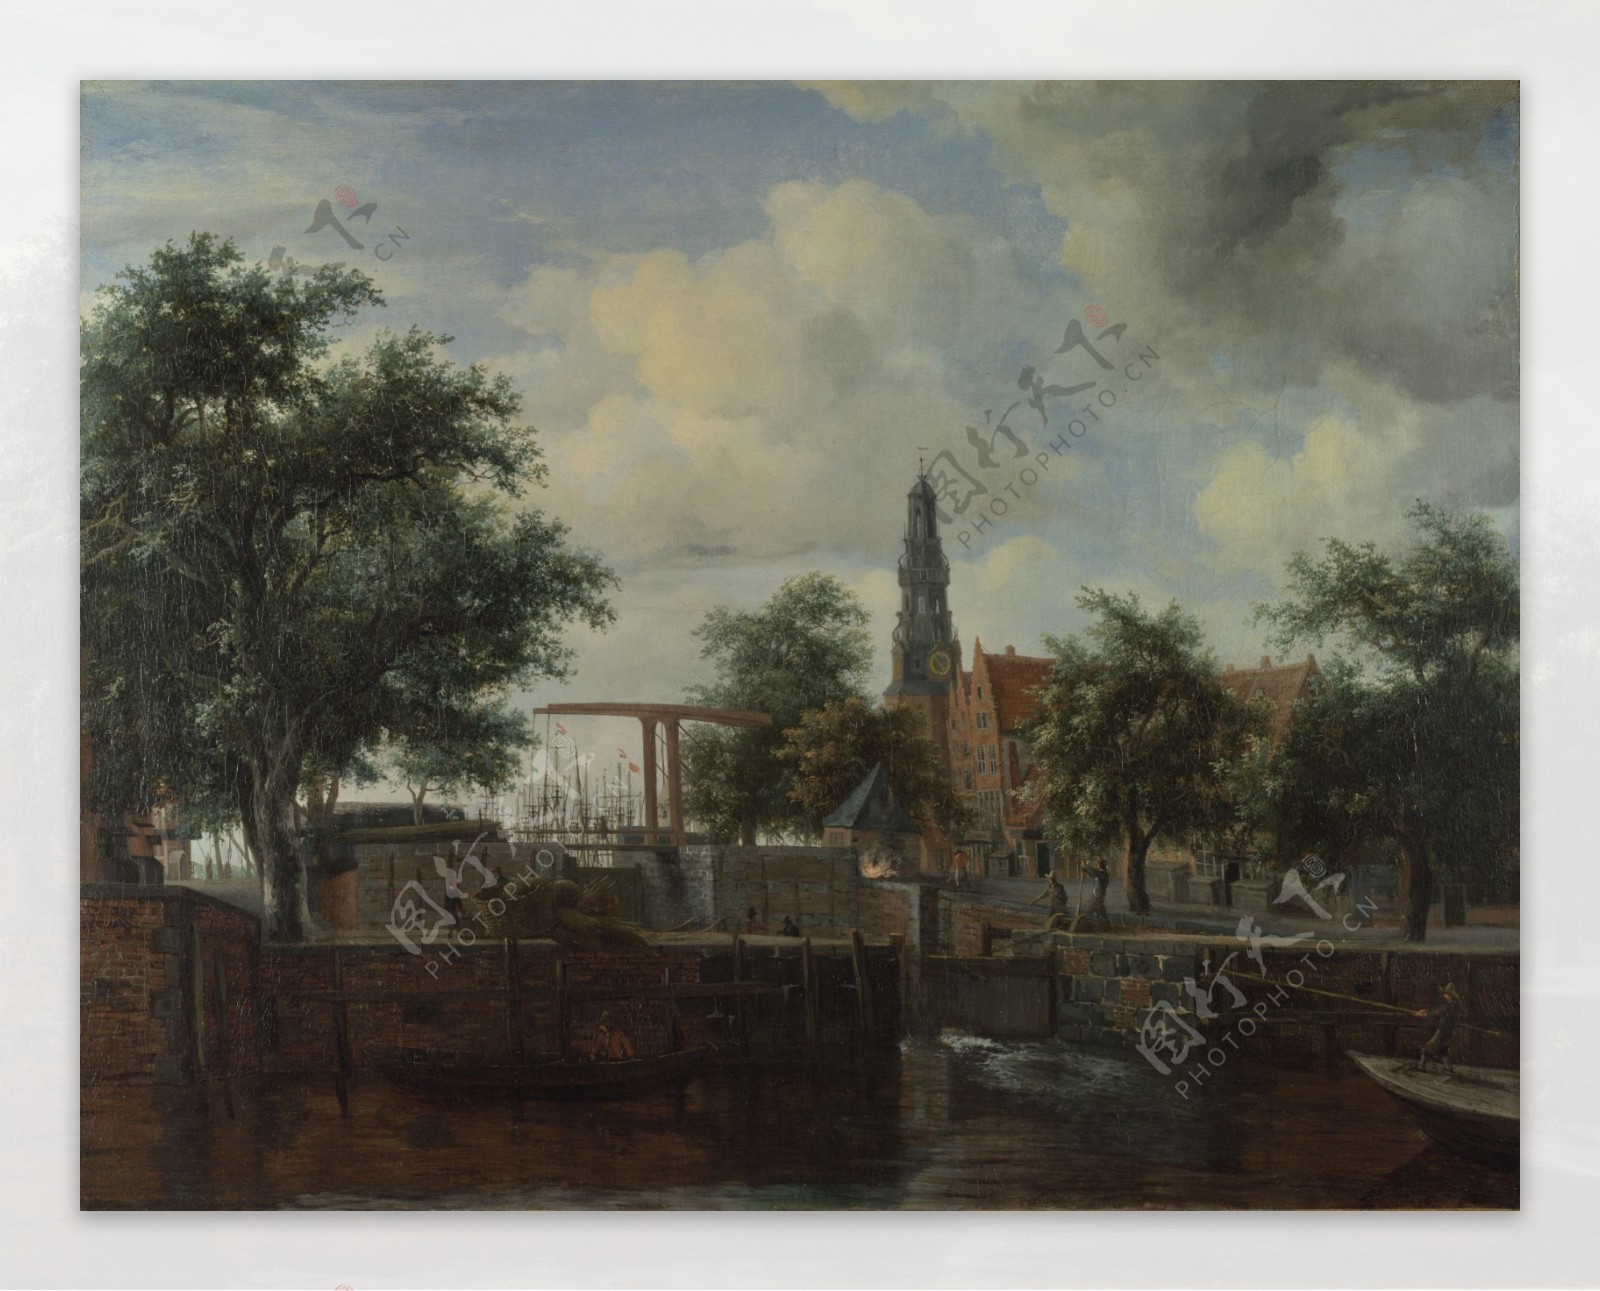 MeindertHobbemaTheHaarlemLockAmsterdam画家古典画古典建筑古典景物装饰画油画